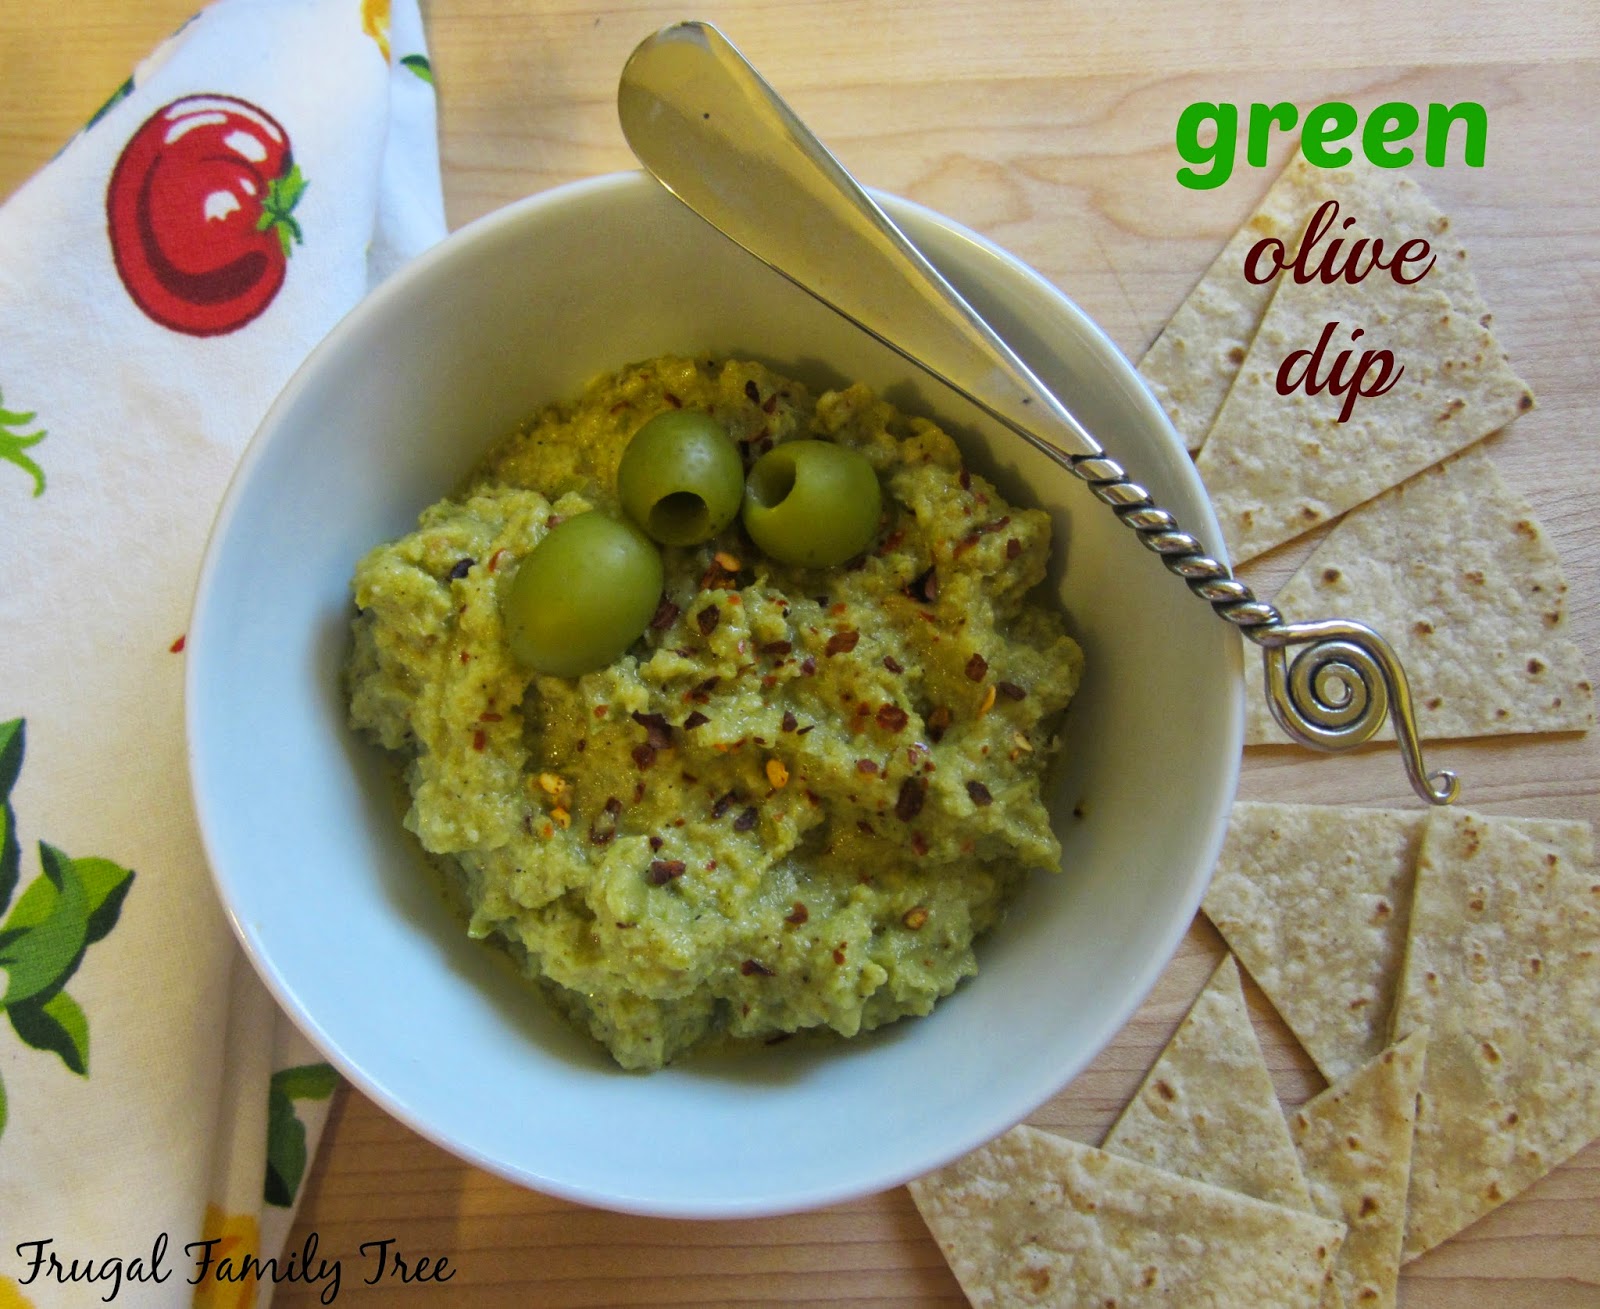 Green Olive Dip With Lindsay Olives #sponsored | Frugal Family Tree